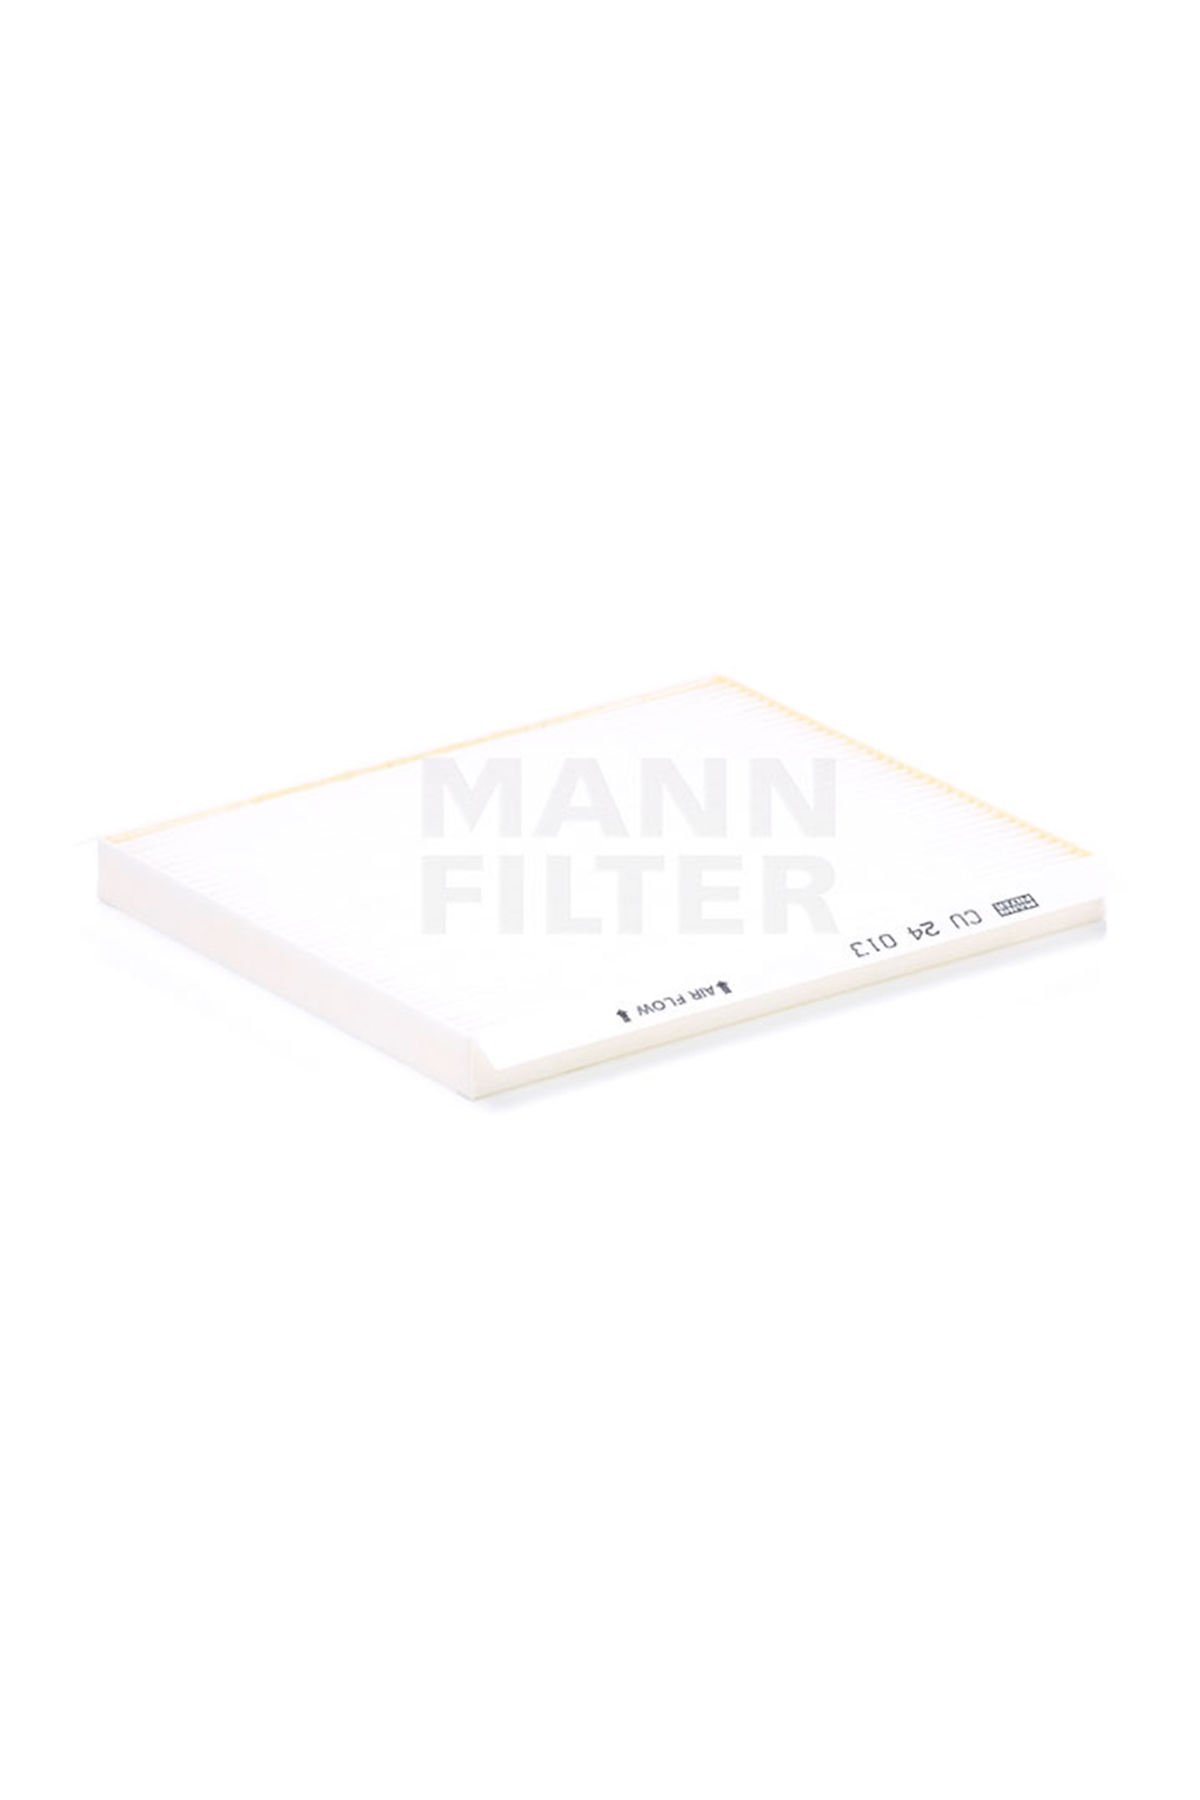 Kia Ceed Polen Filtresi 2012-2017 Mann Filter